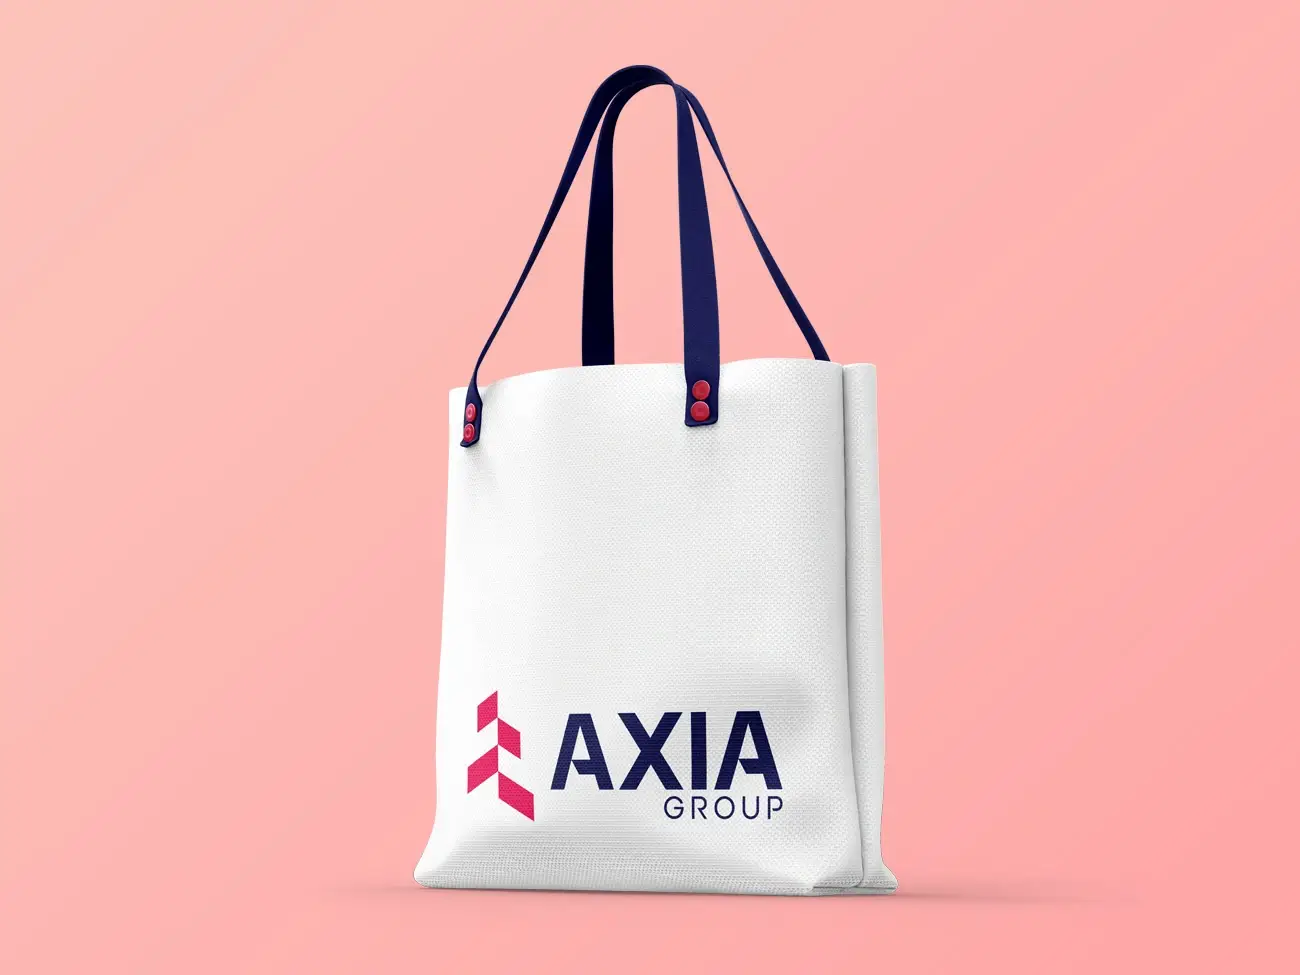 Logodesign til Axia Group